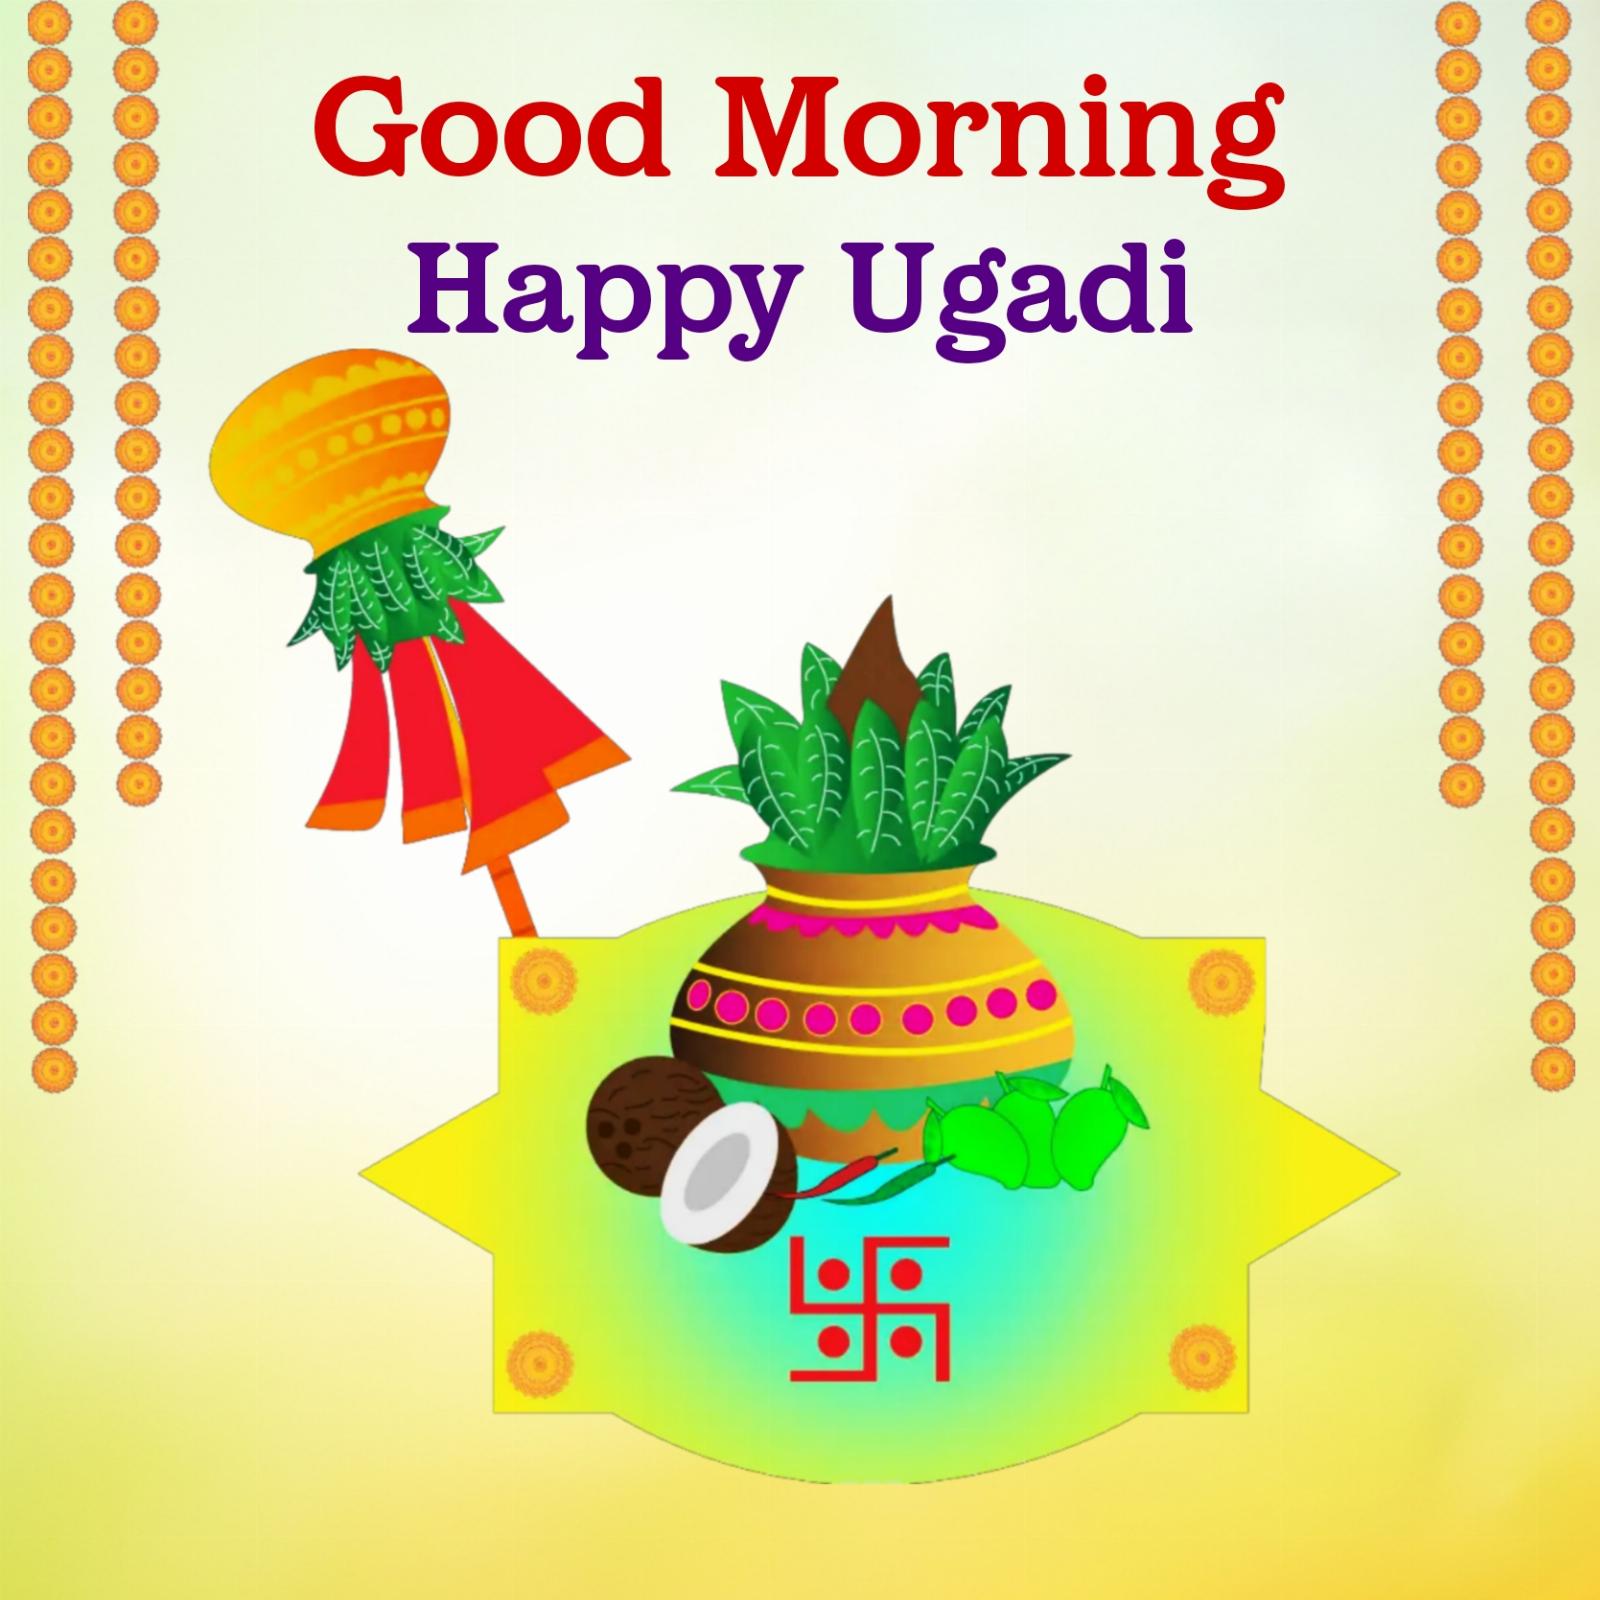 Good Morning Happy Ugadi Images